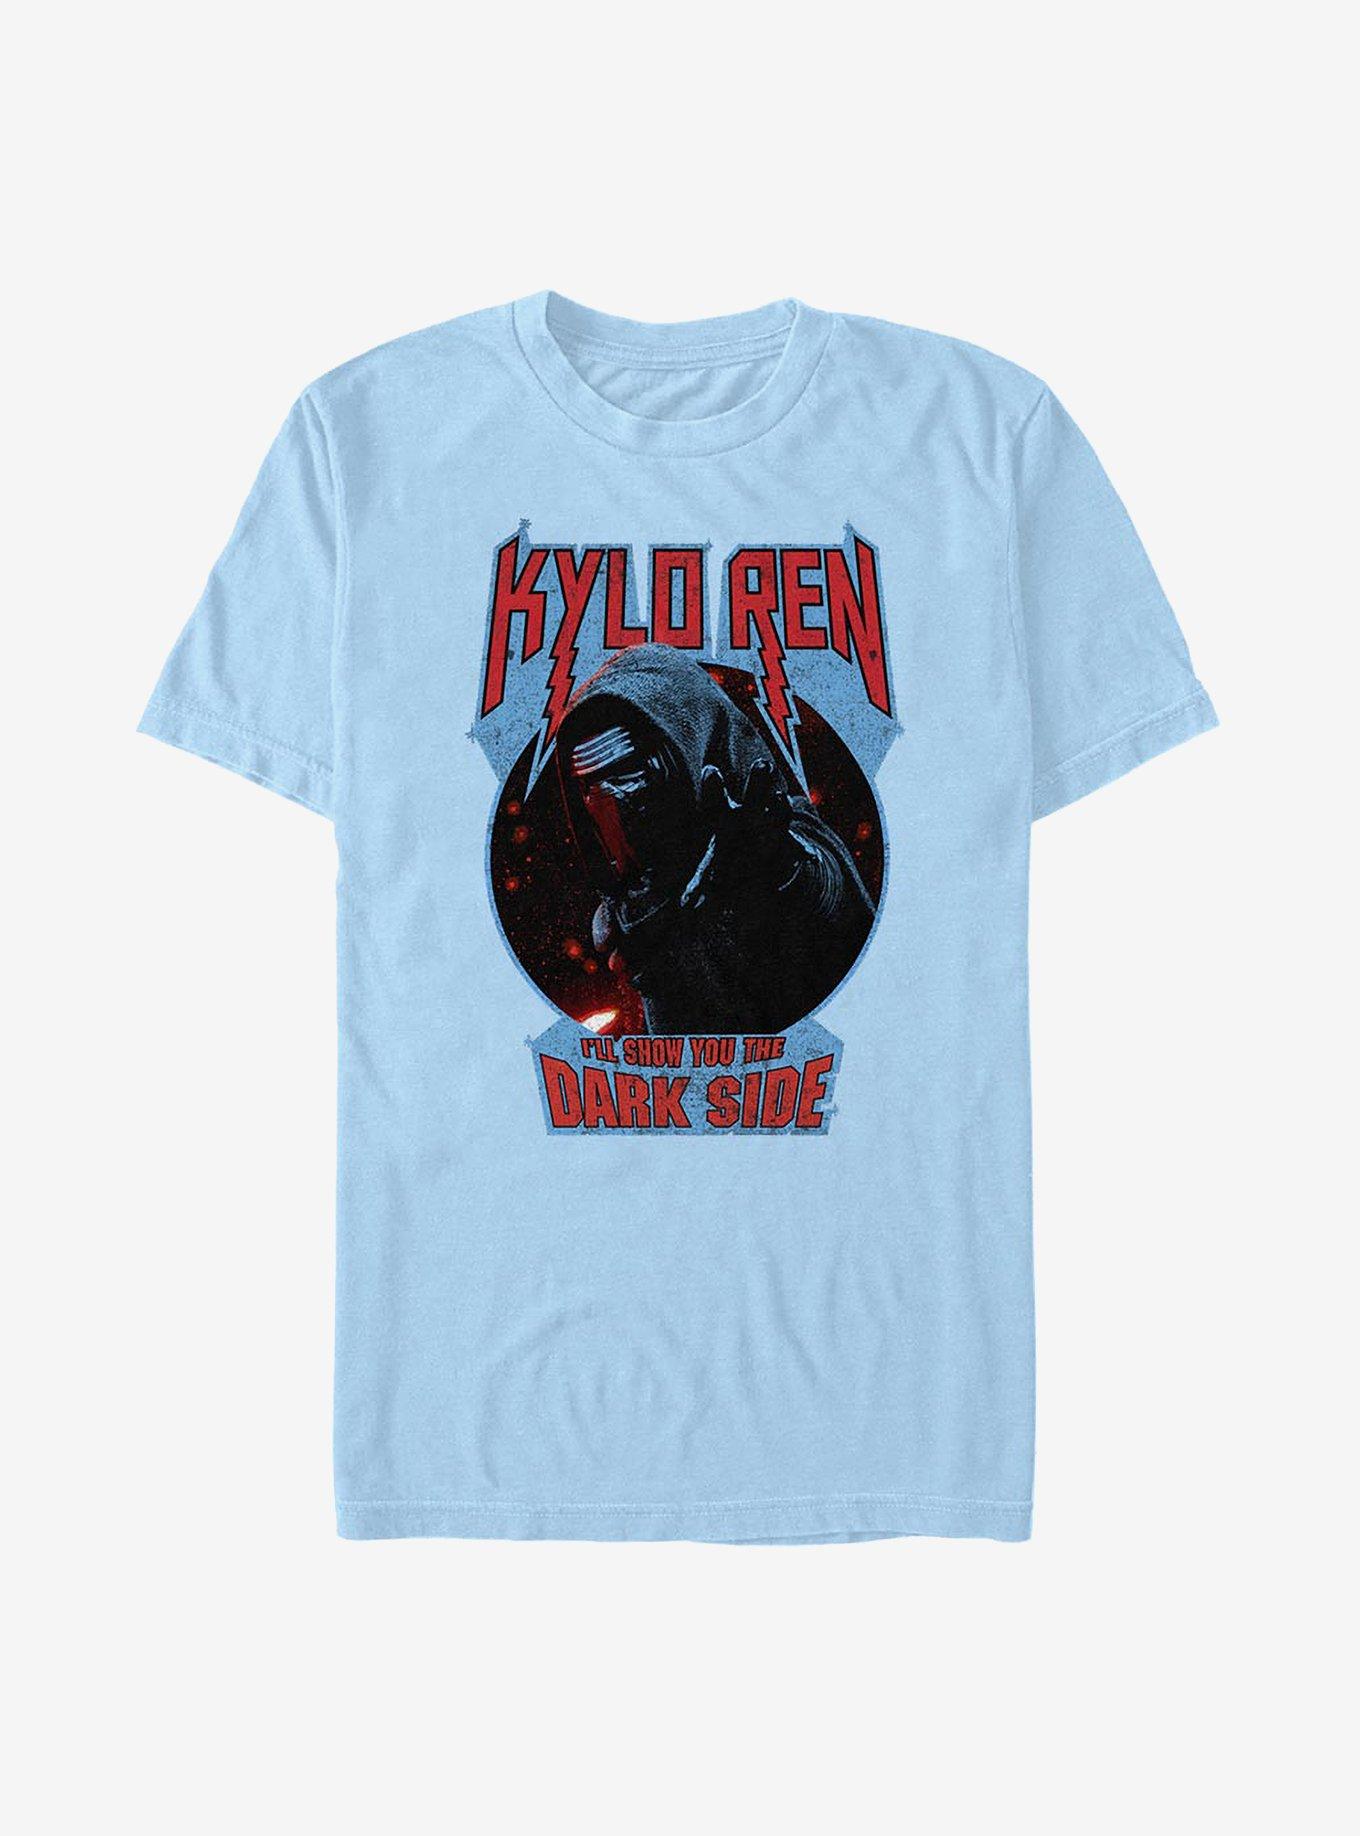 Star Wars: The Force Awakens Kylo Ren Show You The Dark Side T-Shirt, LT BLUE, hi-res